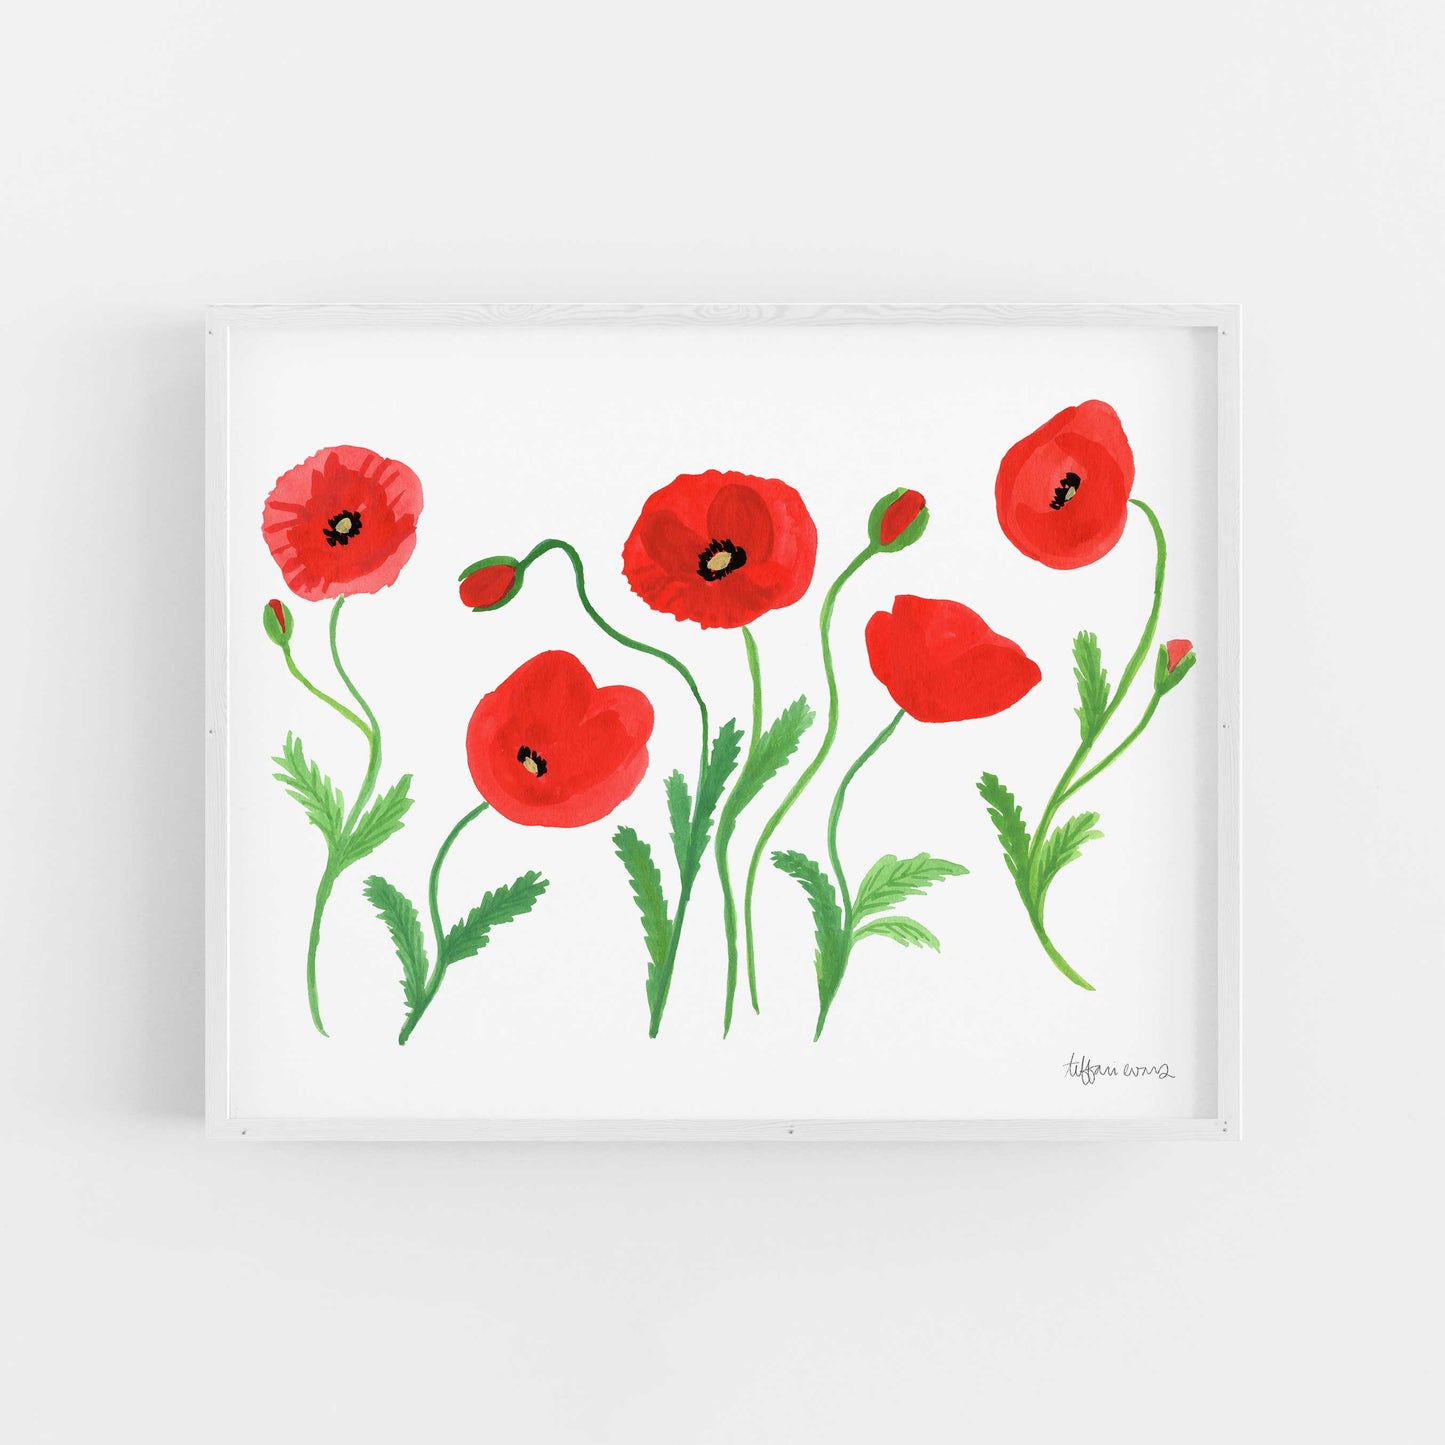 Poppies Art Print